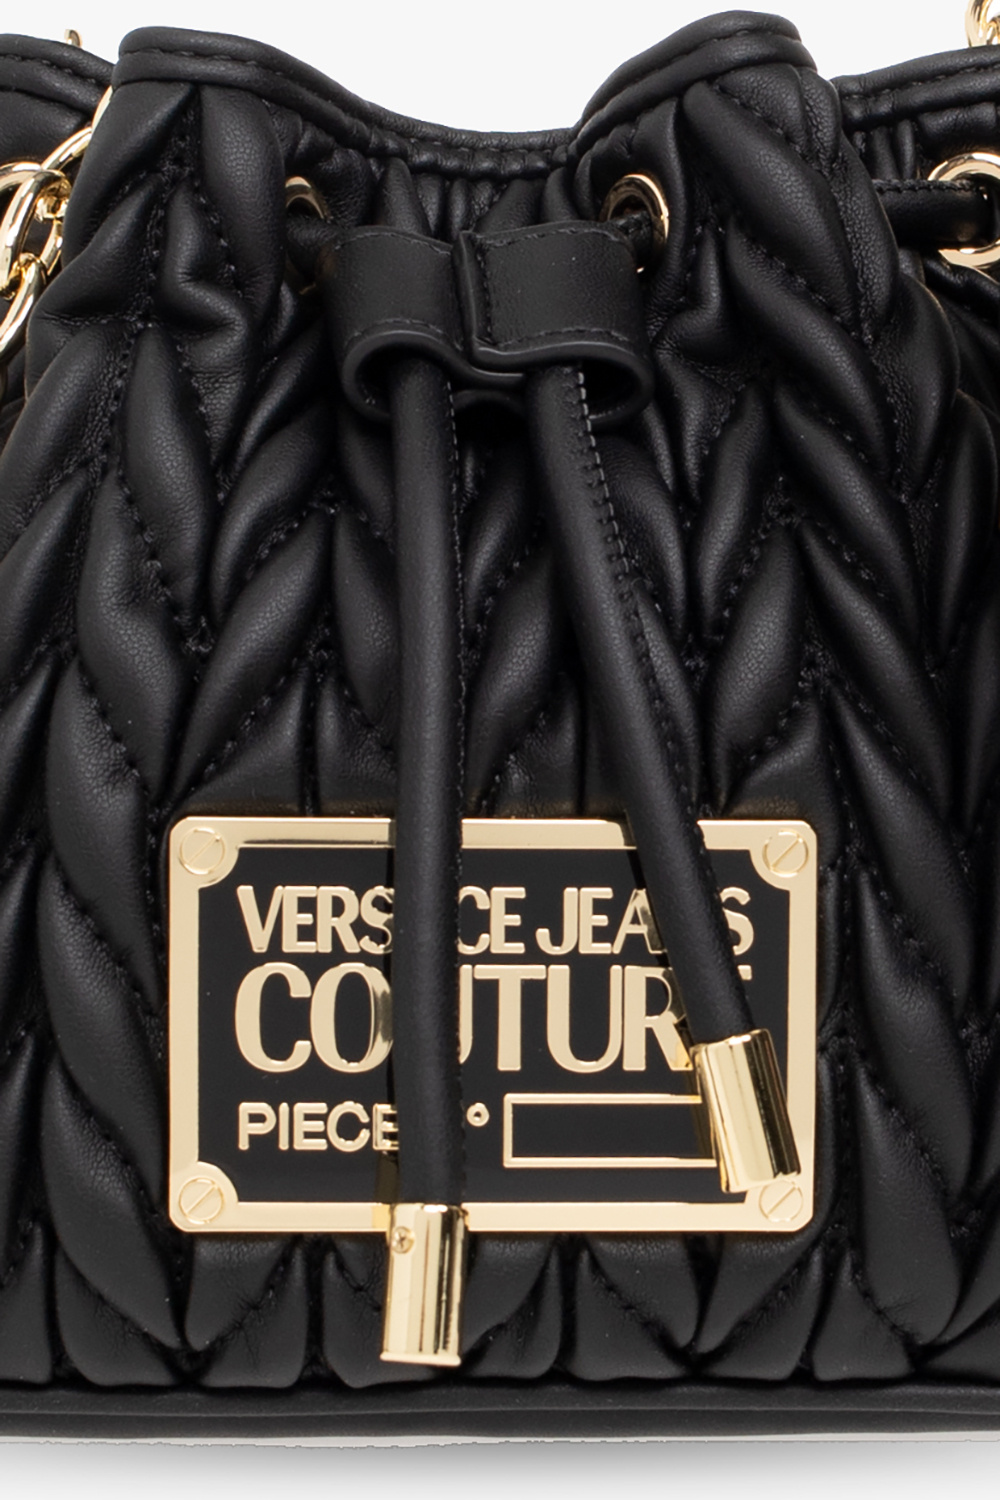 Pink Shoulder bag with logo Versace Jeans Couture - Vitkac Sweden